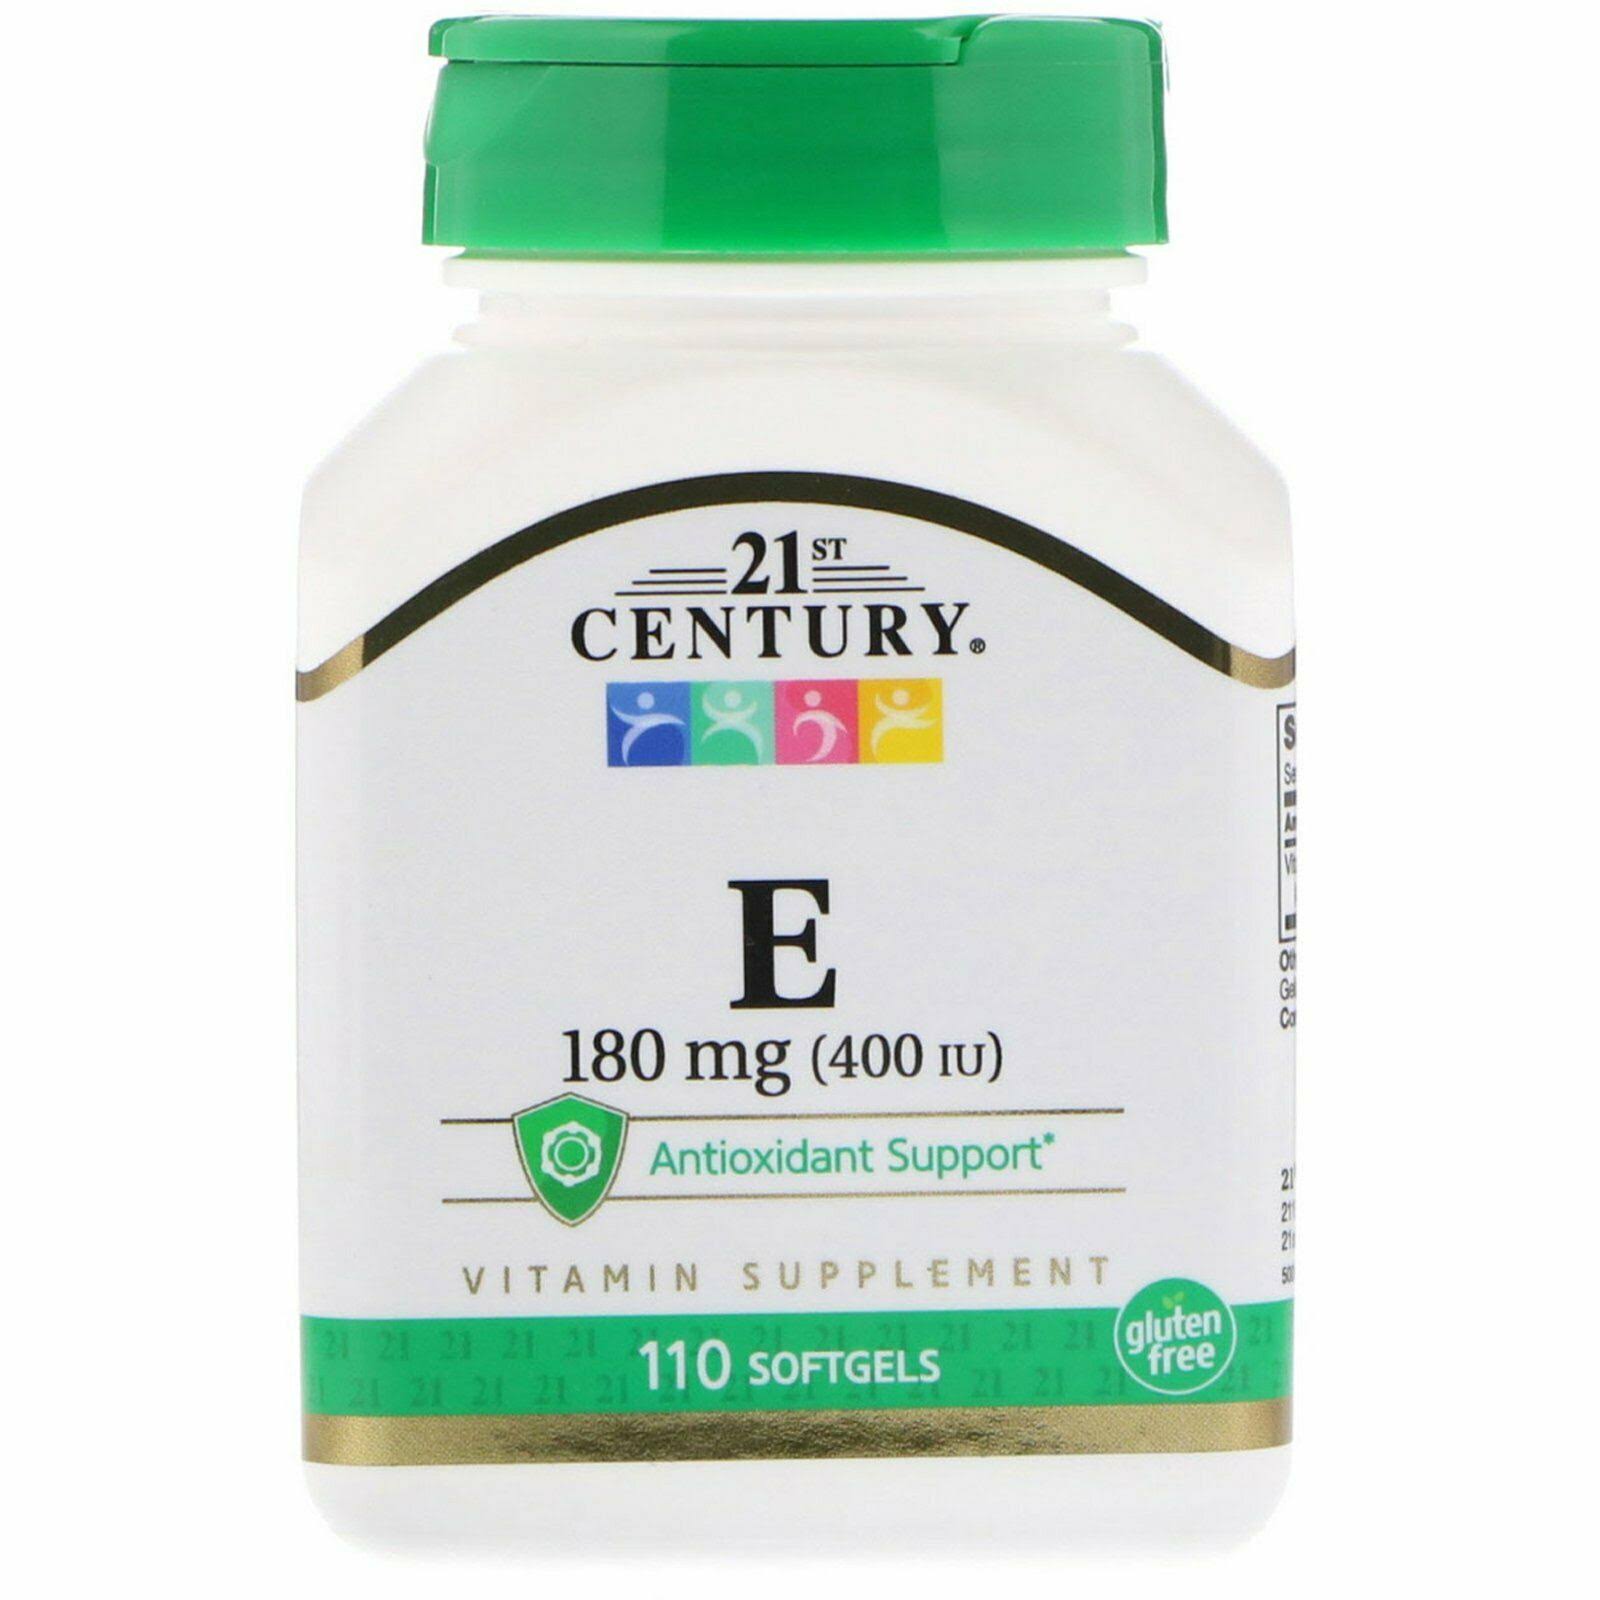 21st Century E 400 Dietary Supplement - 110 Softgels